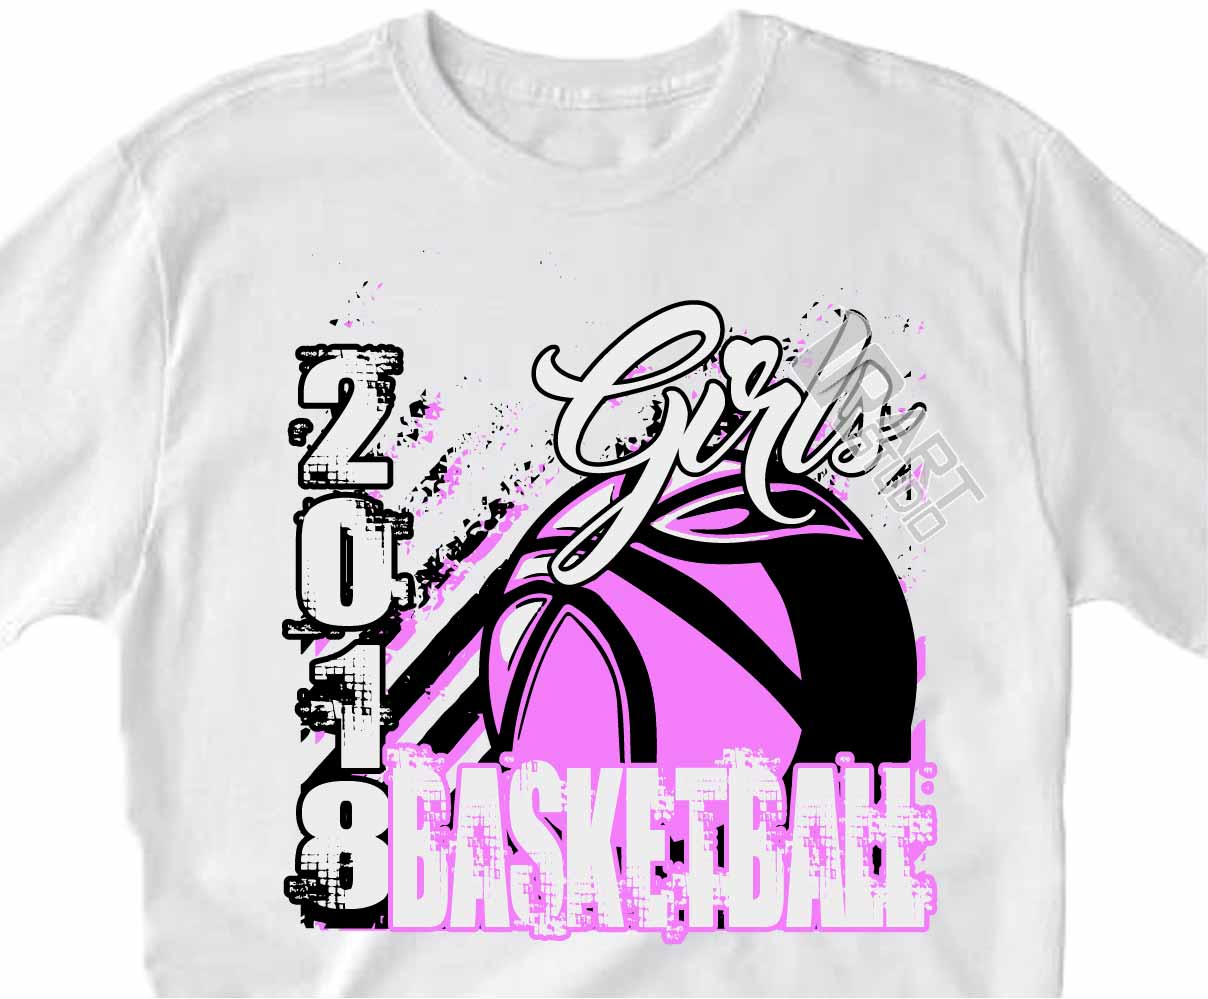 girls basketball logos for shirts